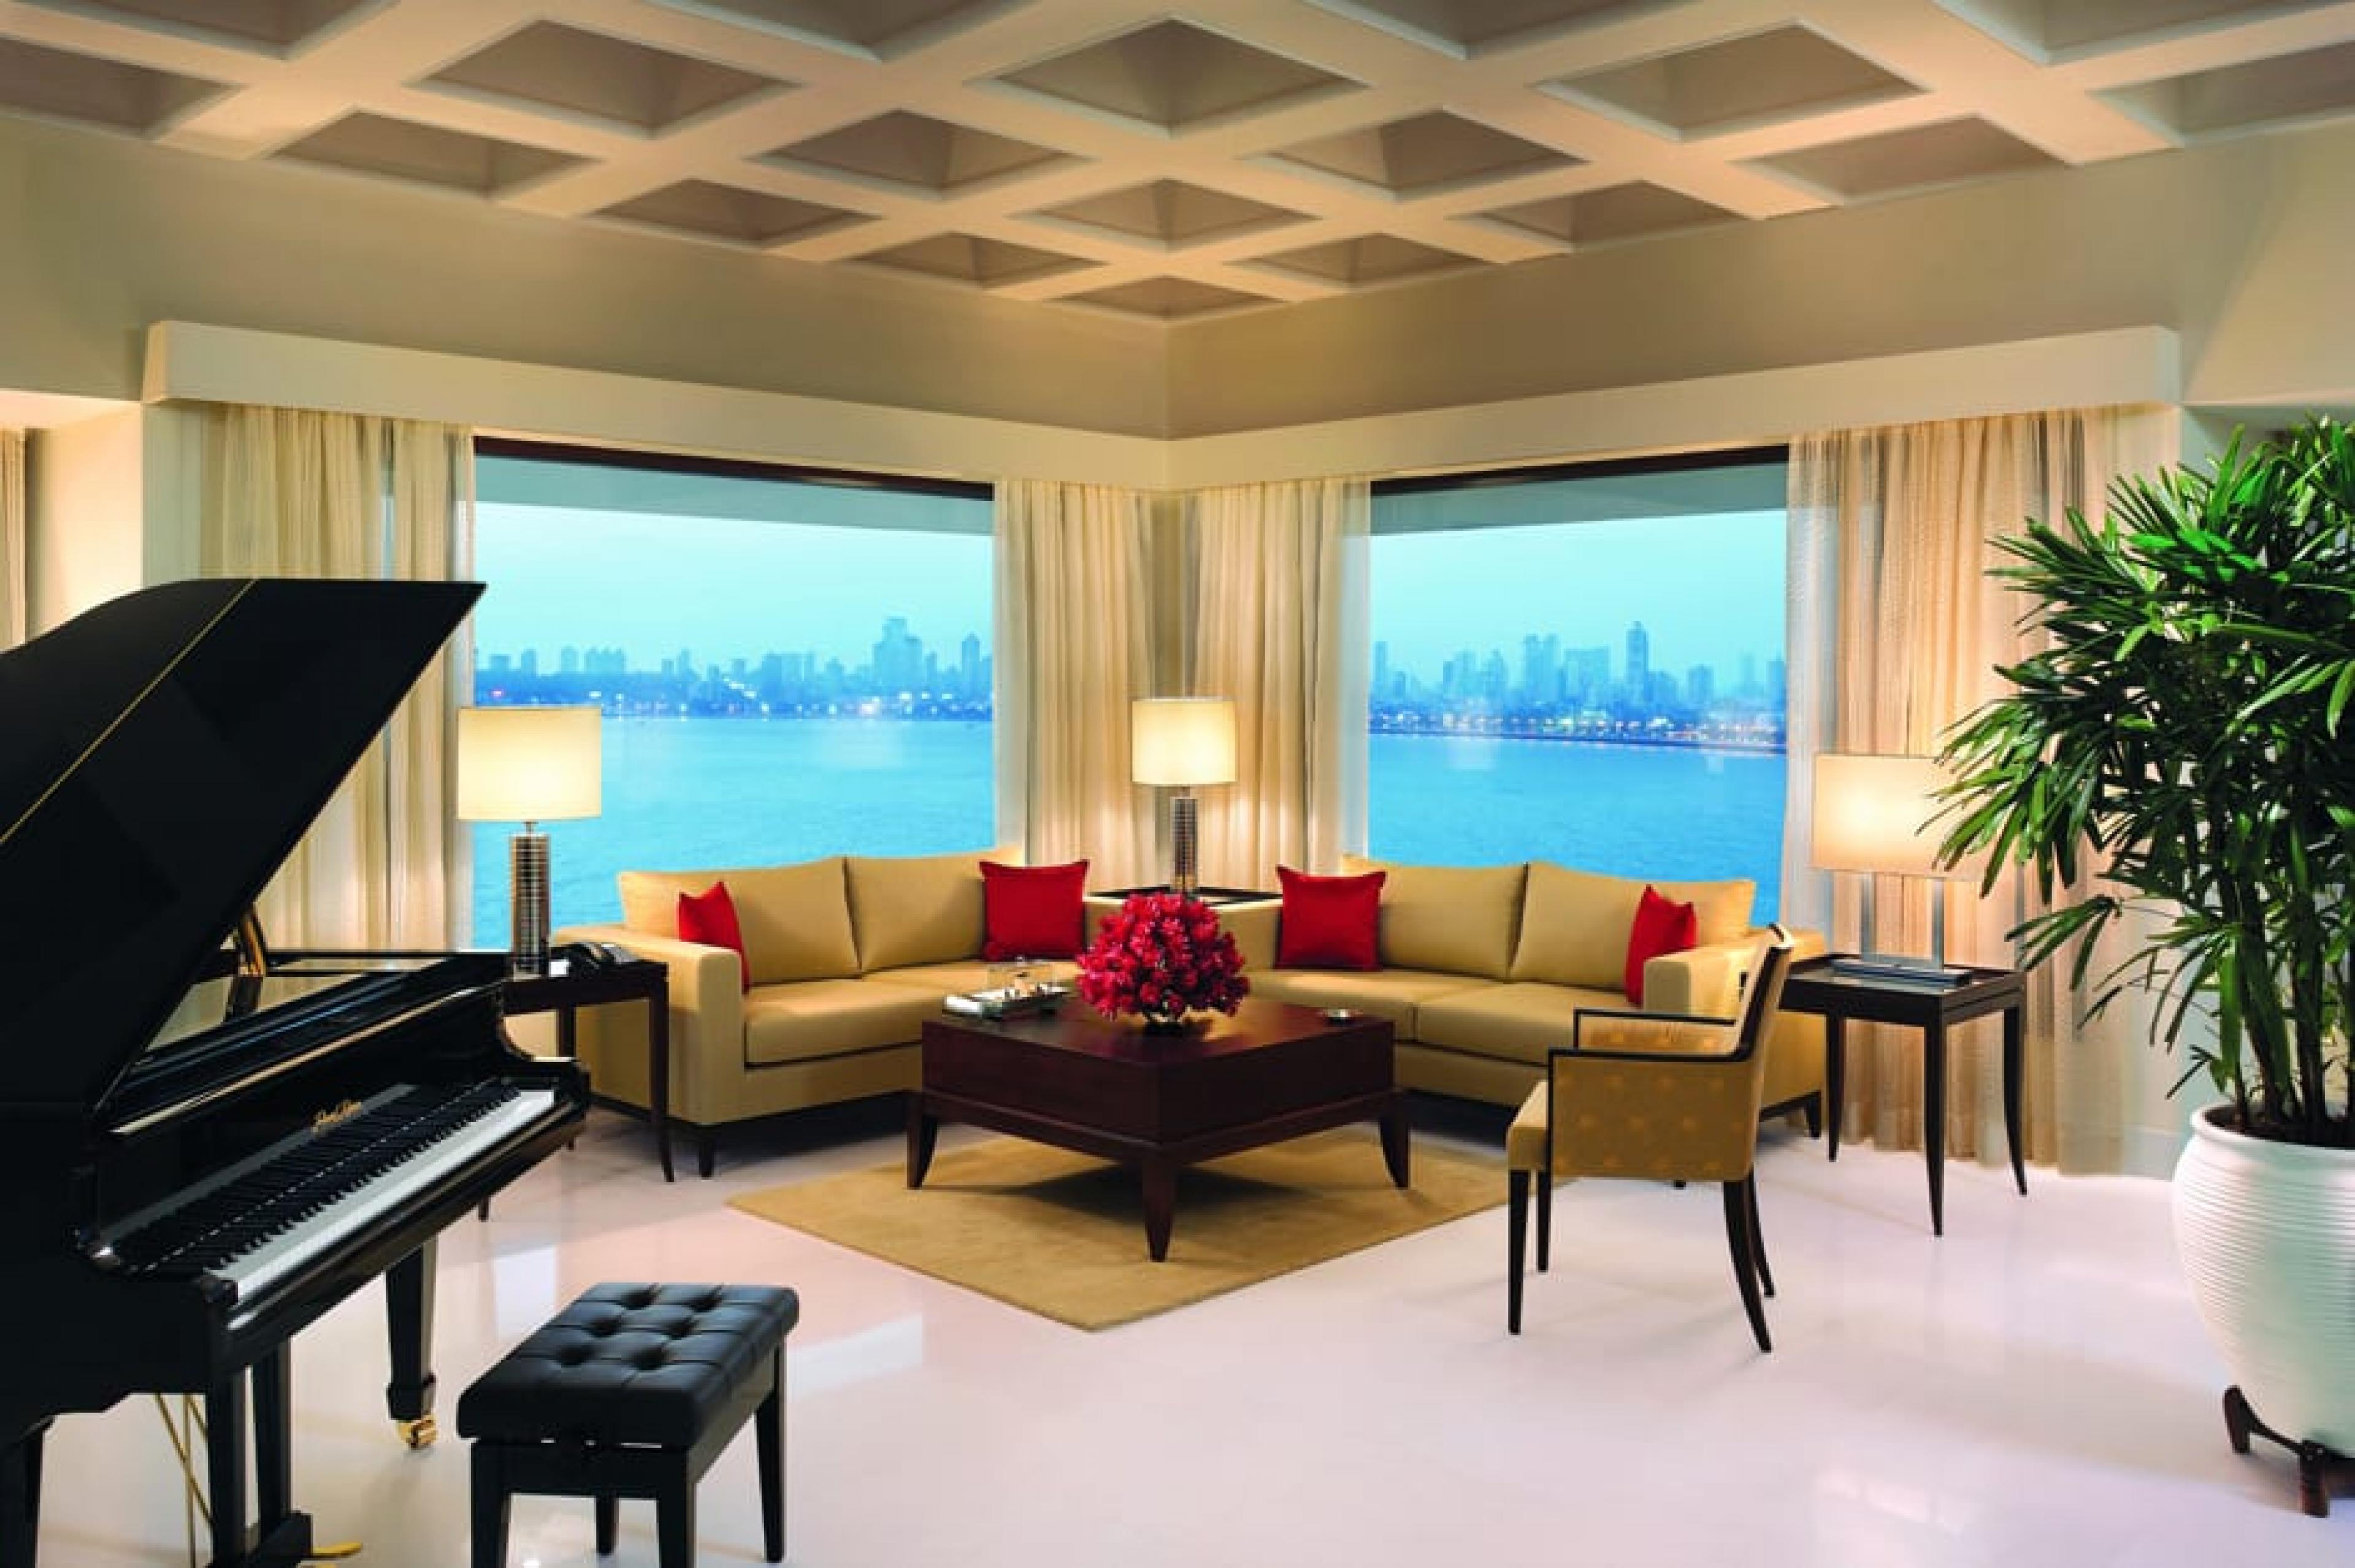 The Kohinoor presidential suite at The Oberoi, Mumbai, India